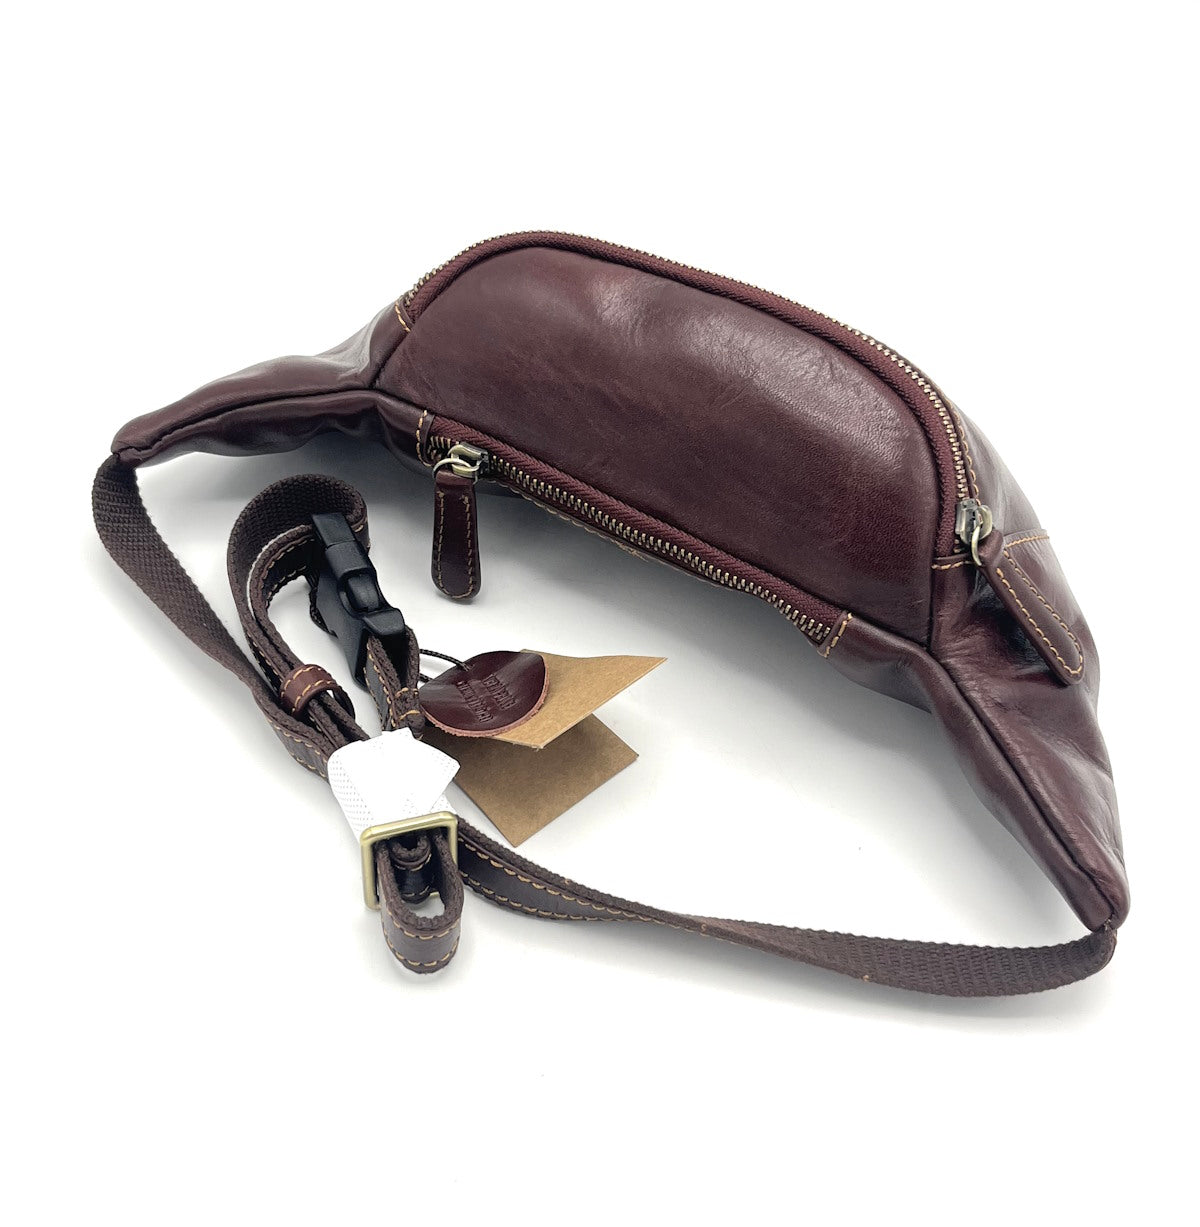 Buffered leather waist bag, for men, art. TA4803